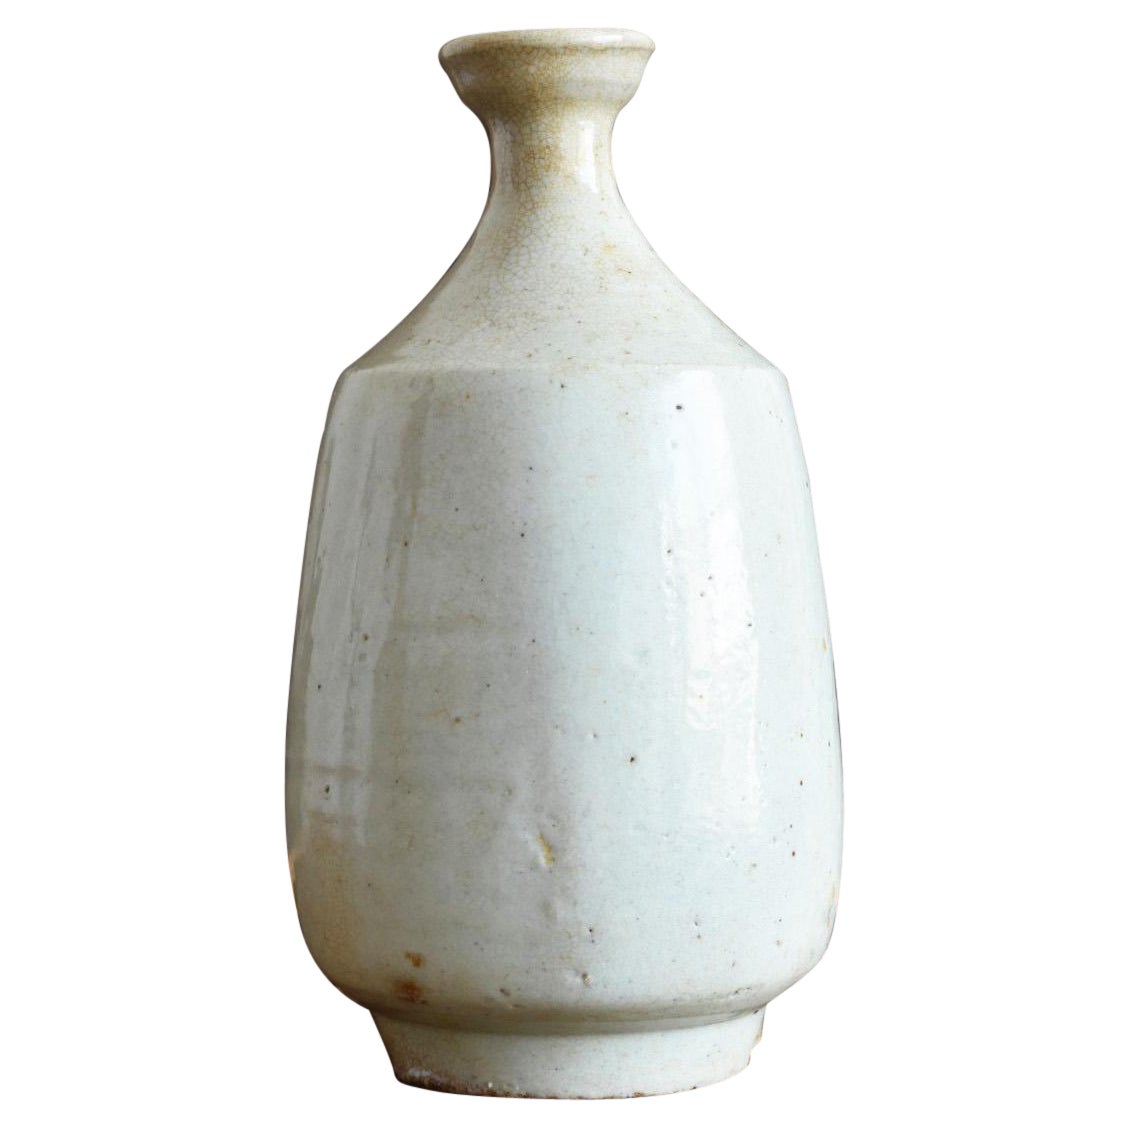 Korean Antique White Porcelain Vase / Nice Shaped Vase / Late 18th Century